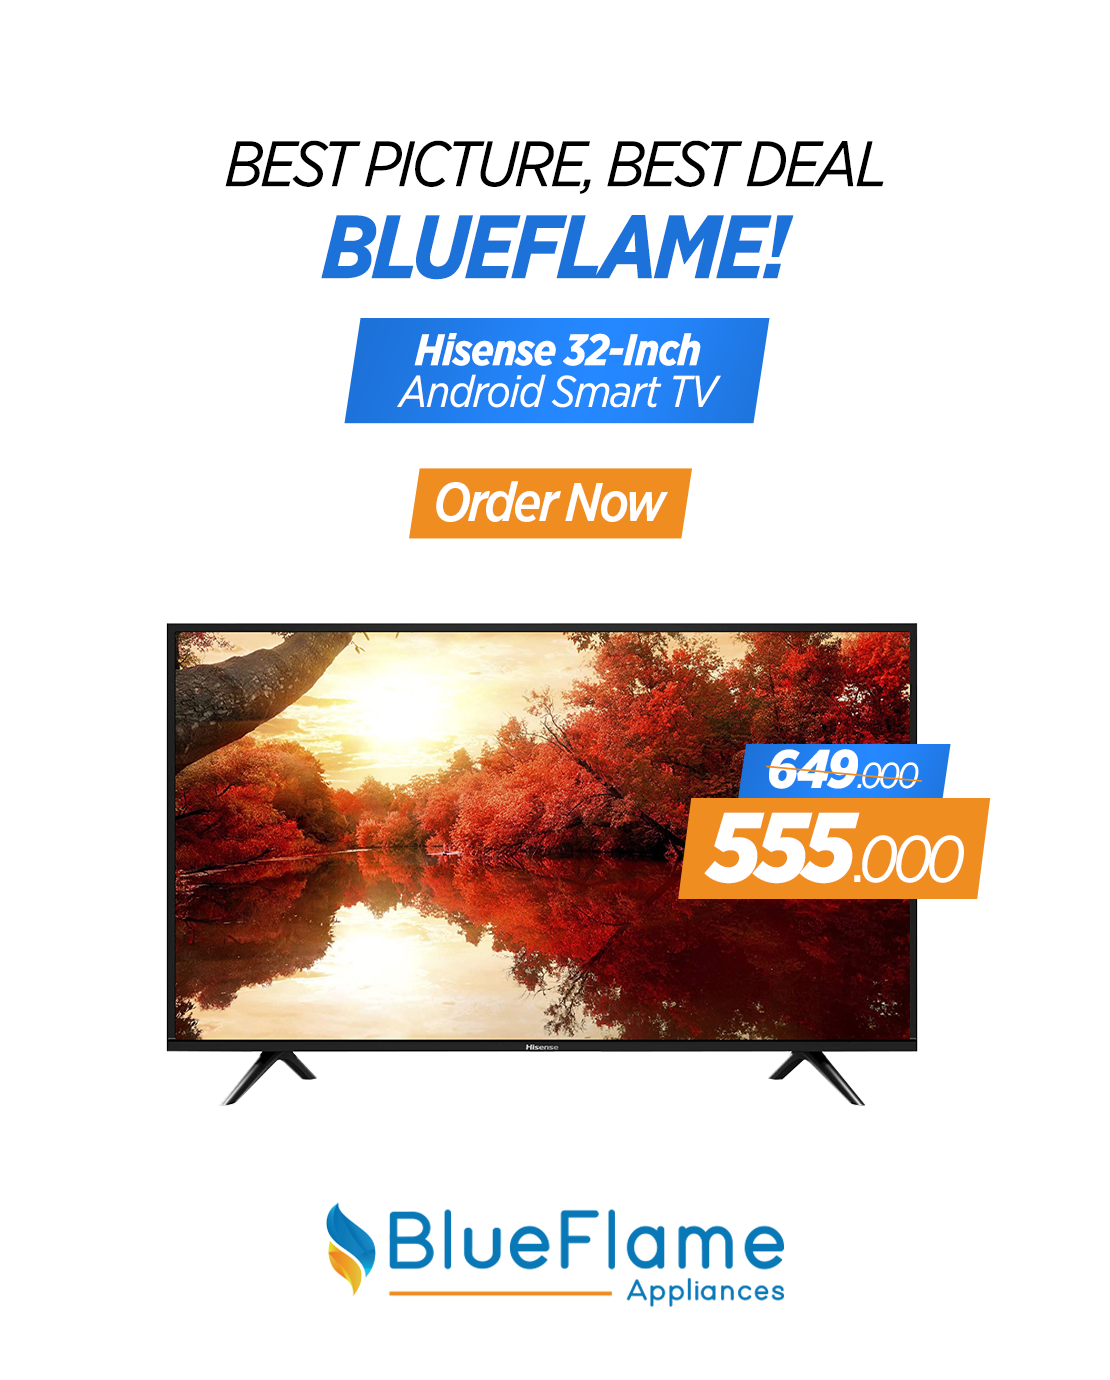 blueflame-web-mobil1